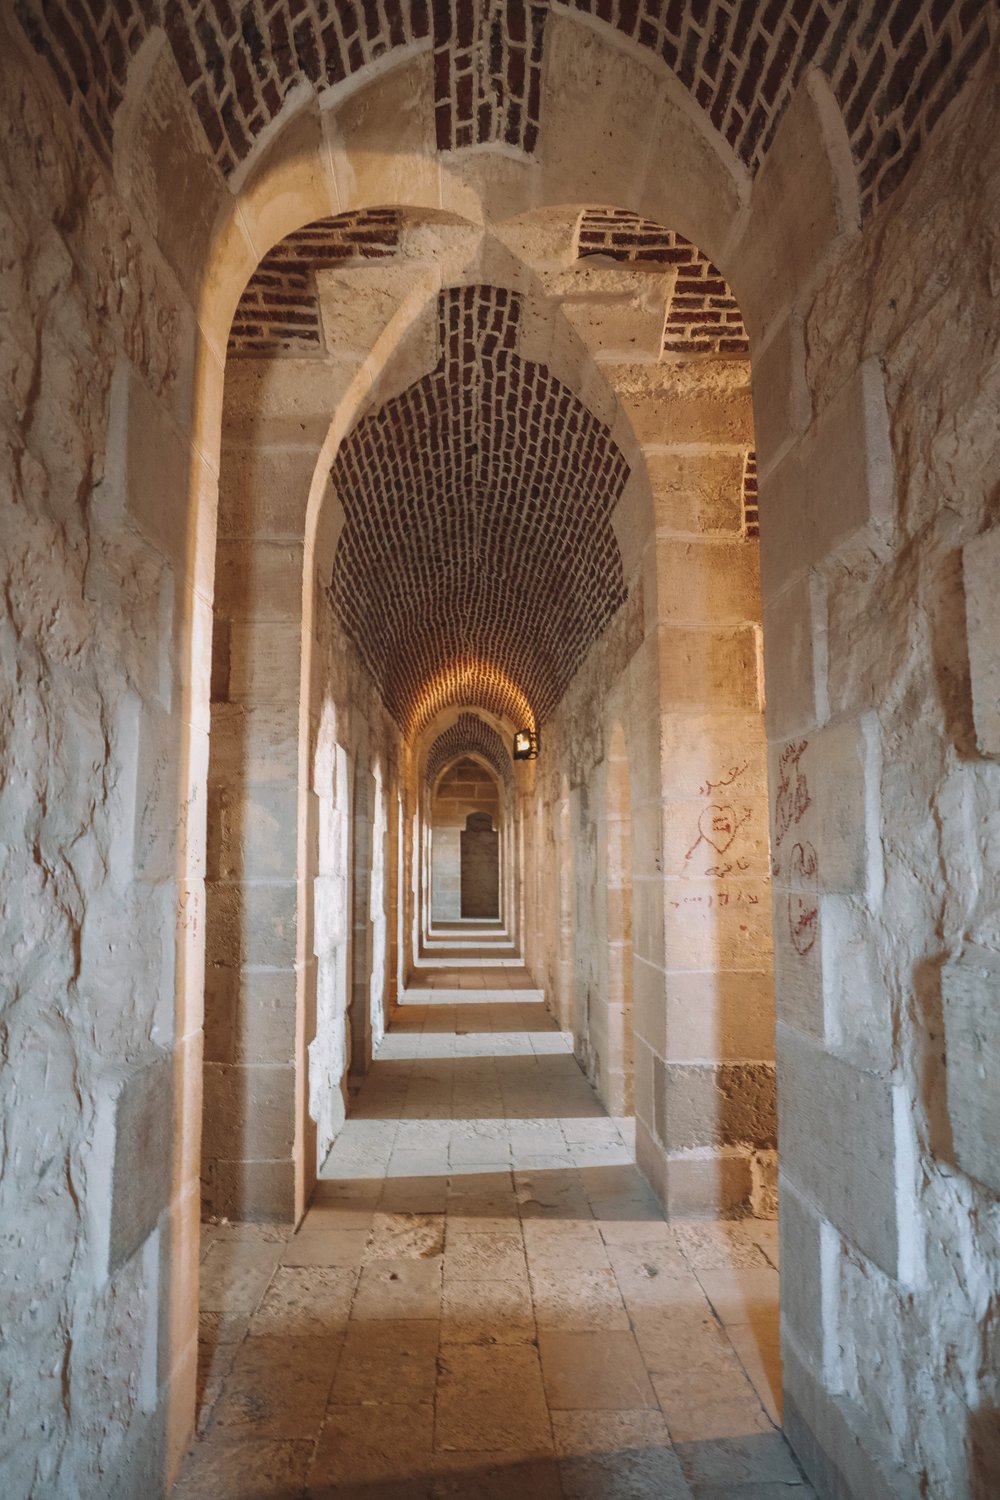 The infinite hallways of the citadel - Citadel of Qaitbay - Alexandria - Egypt